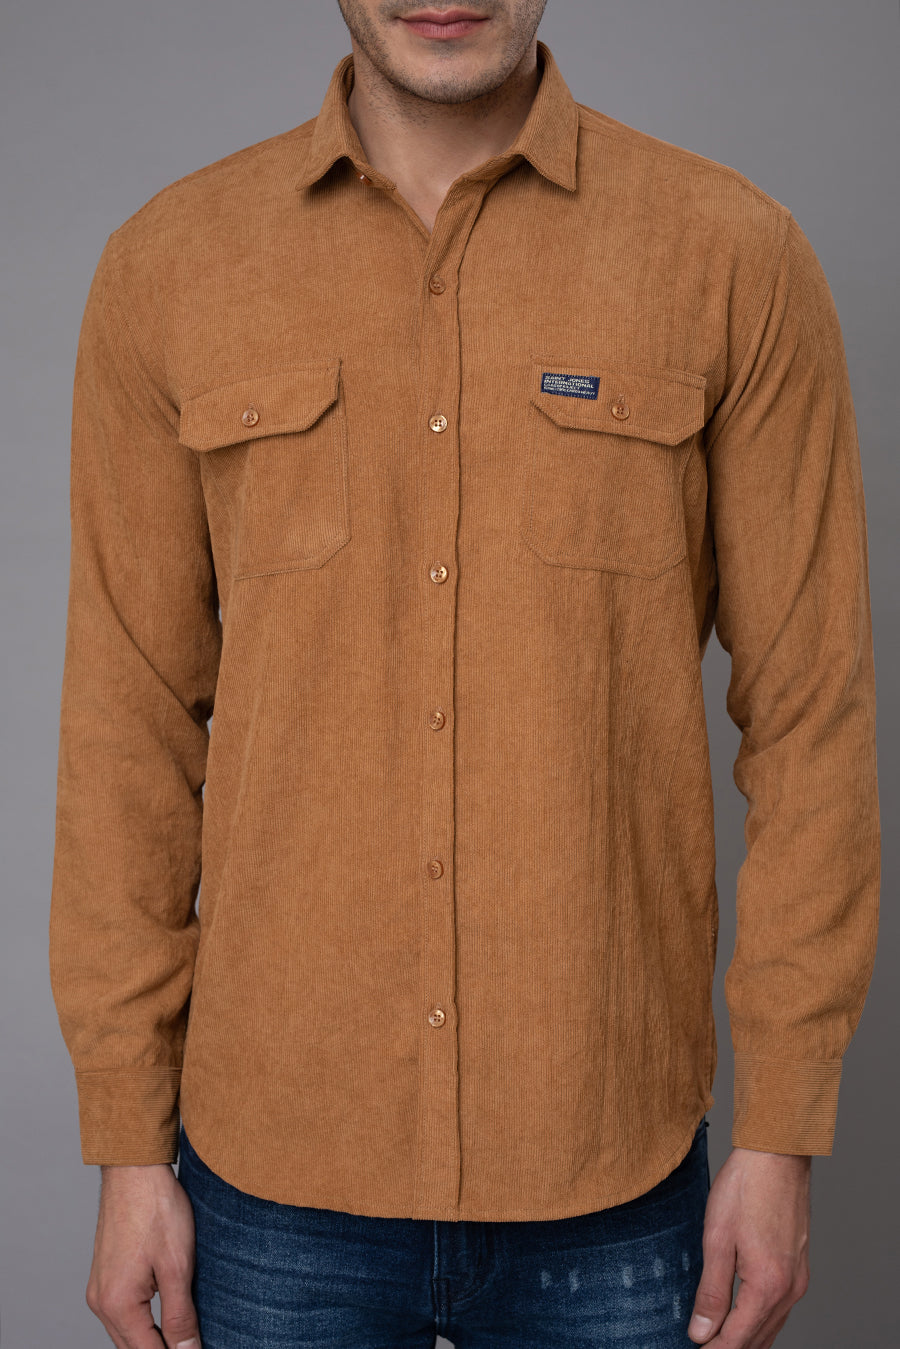 Brown corduroy shirt